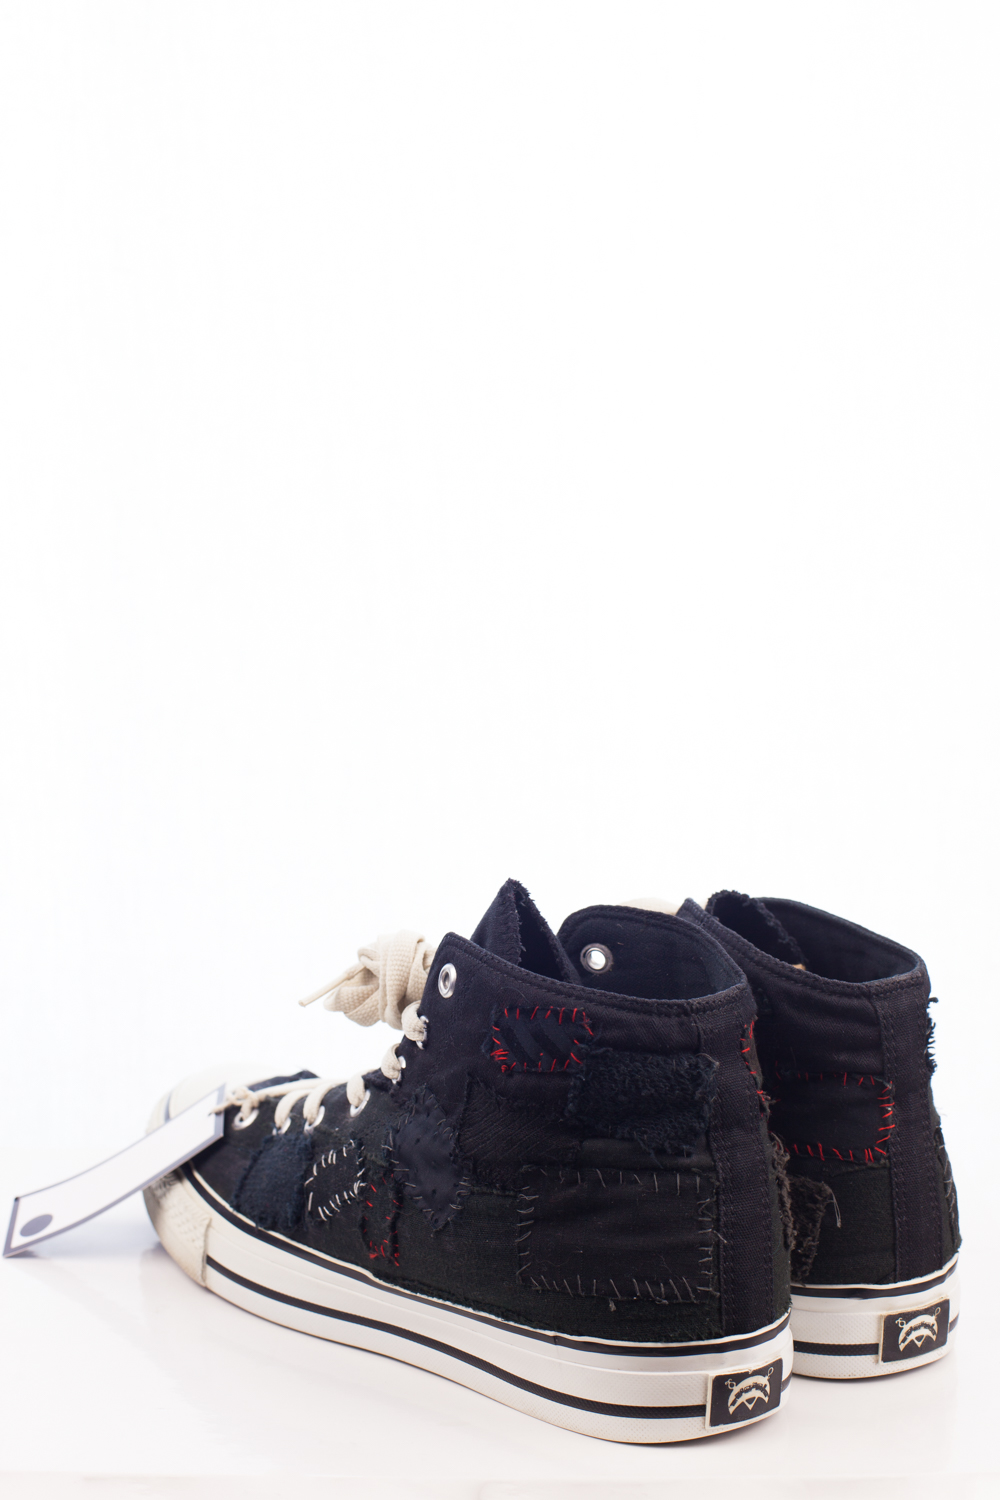 “Scab” Mid Top Sneaker